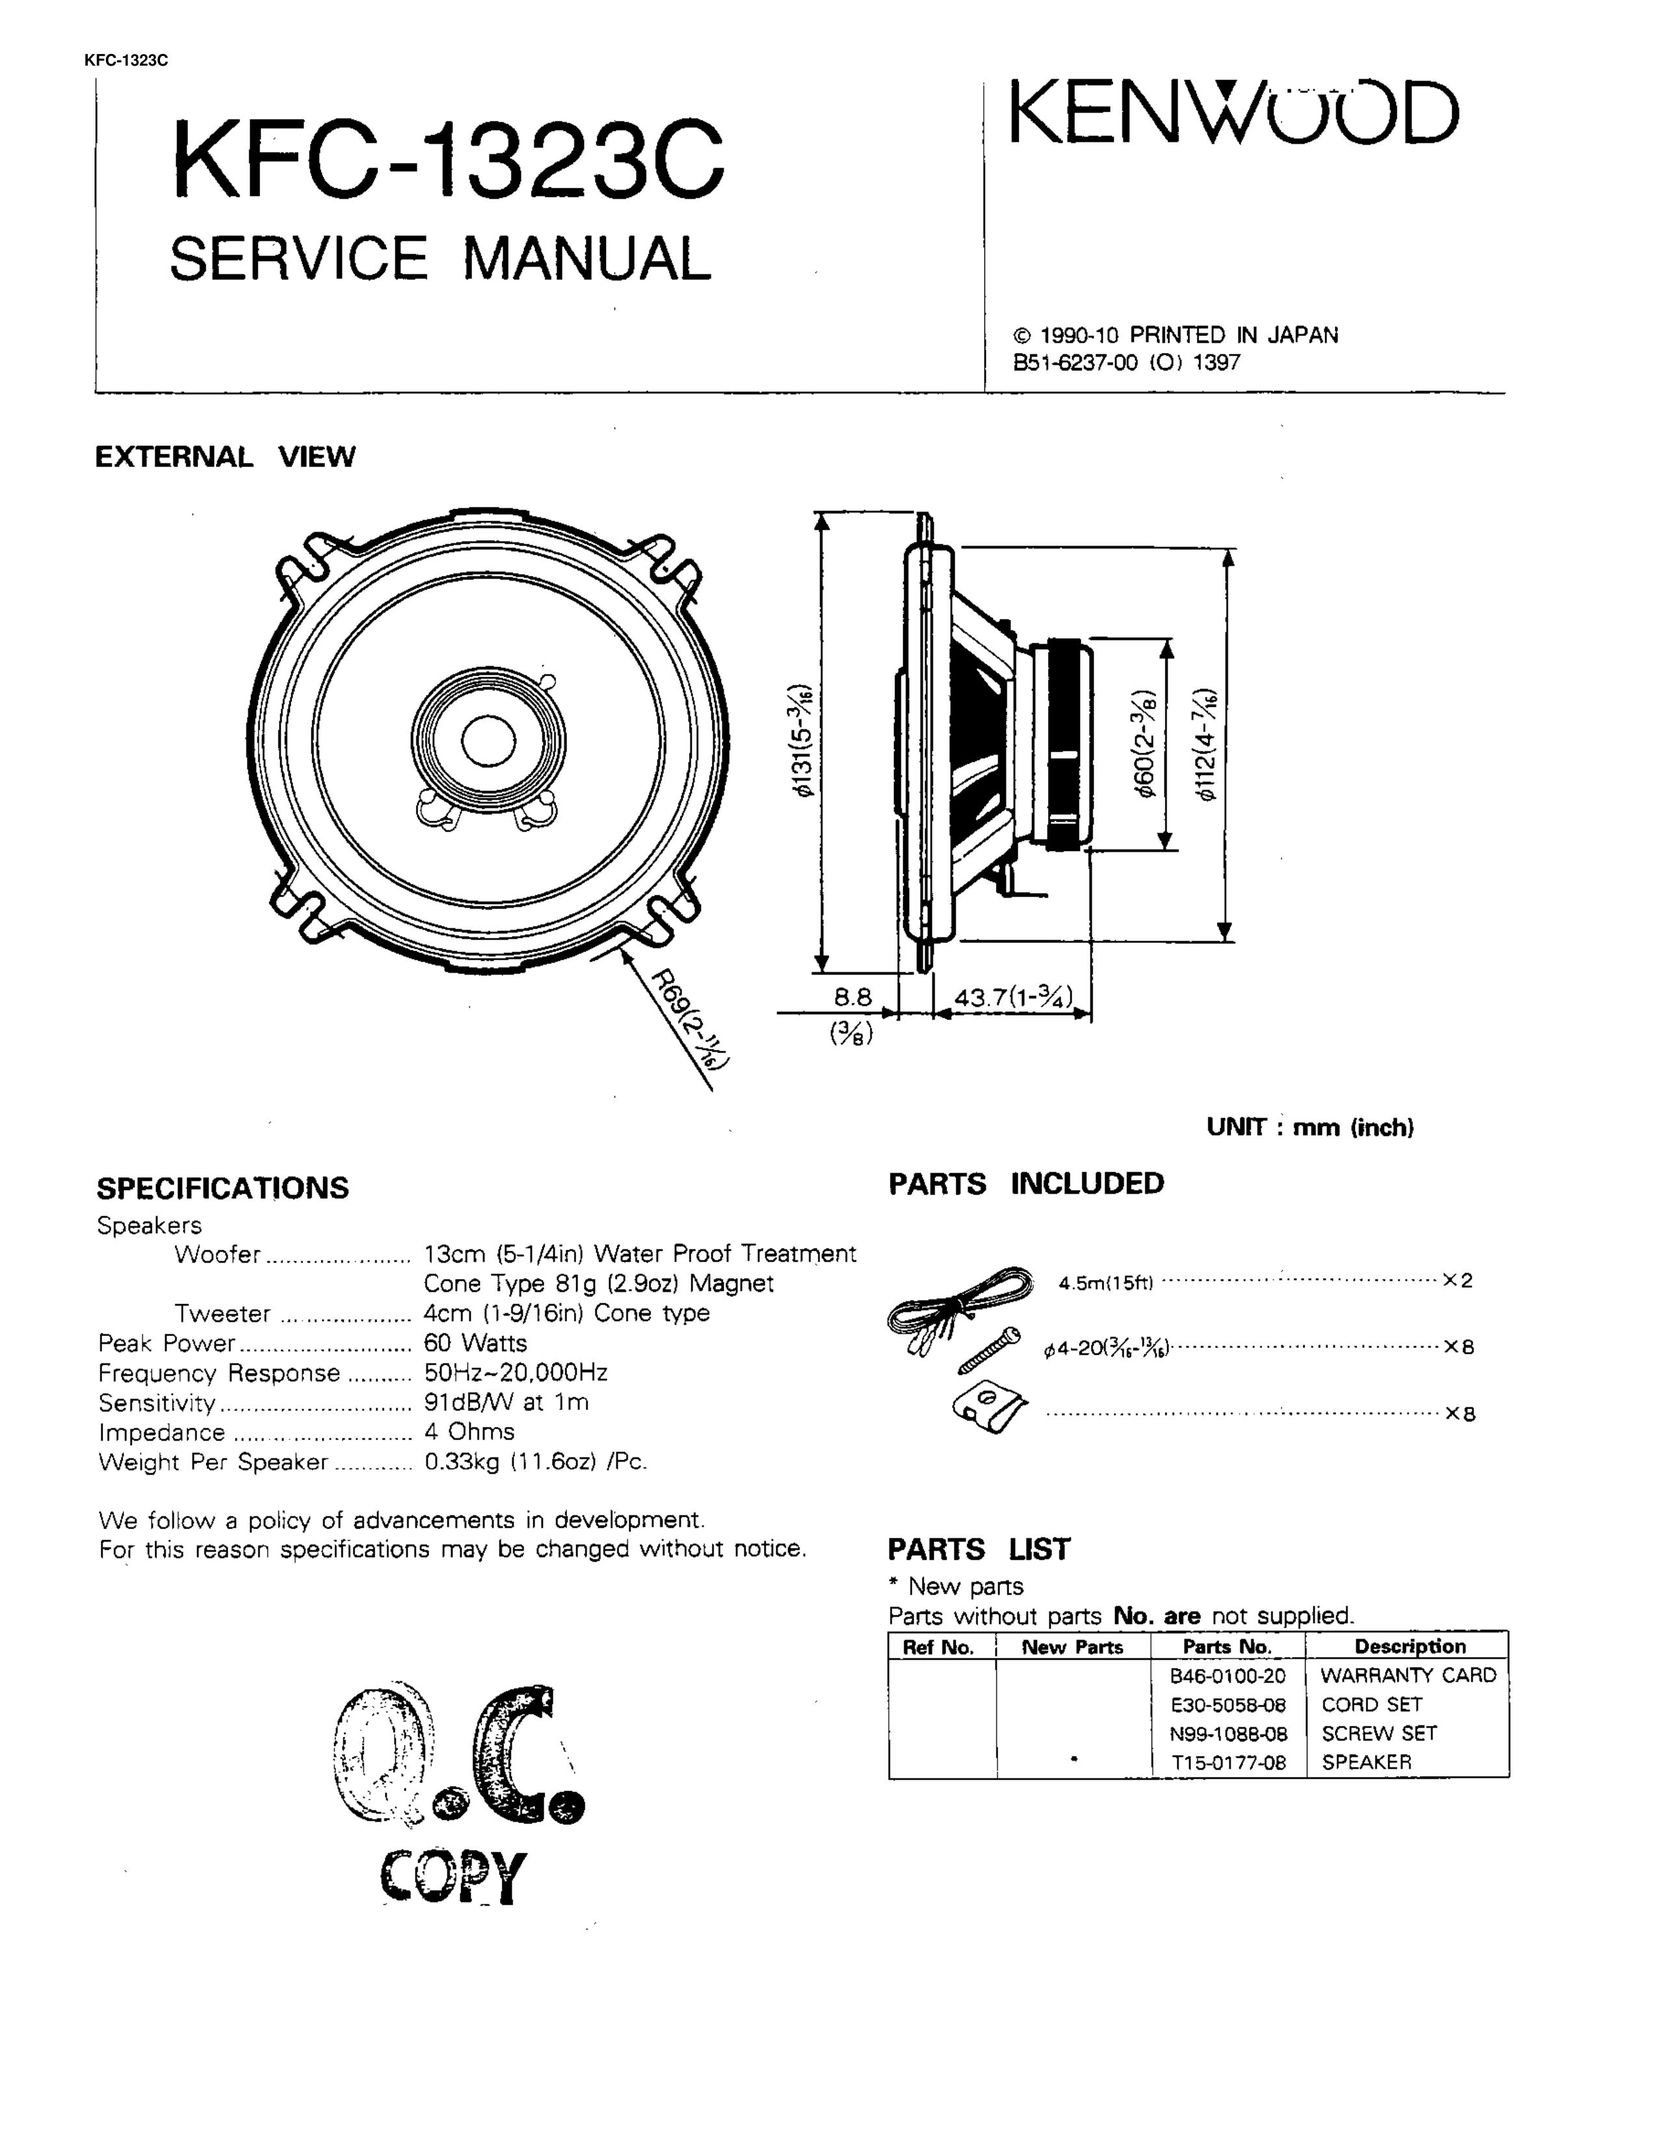 Kenwood KFC-1323C Speaker User Manual